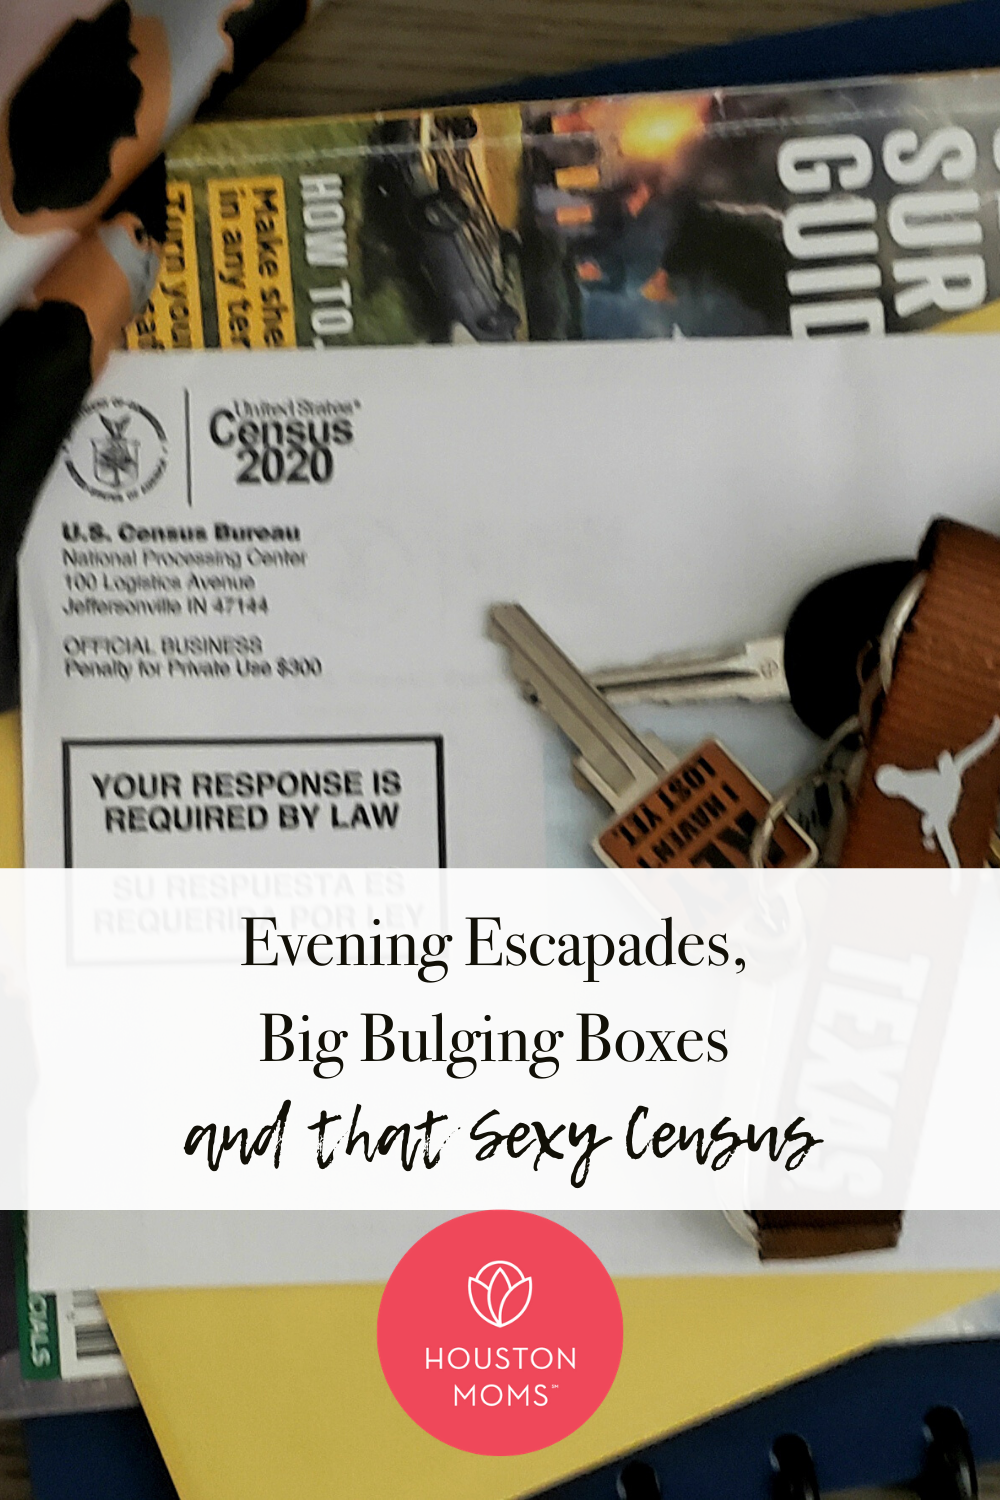 Houston Moms "Eventing Escapades, Big Bulging Boxes, and that Sexy Census" #houstonmomsblog #houstonmoms #momsaroundhouston